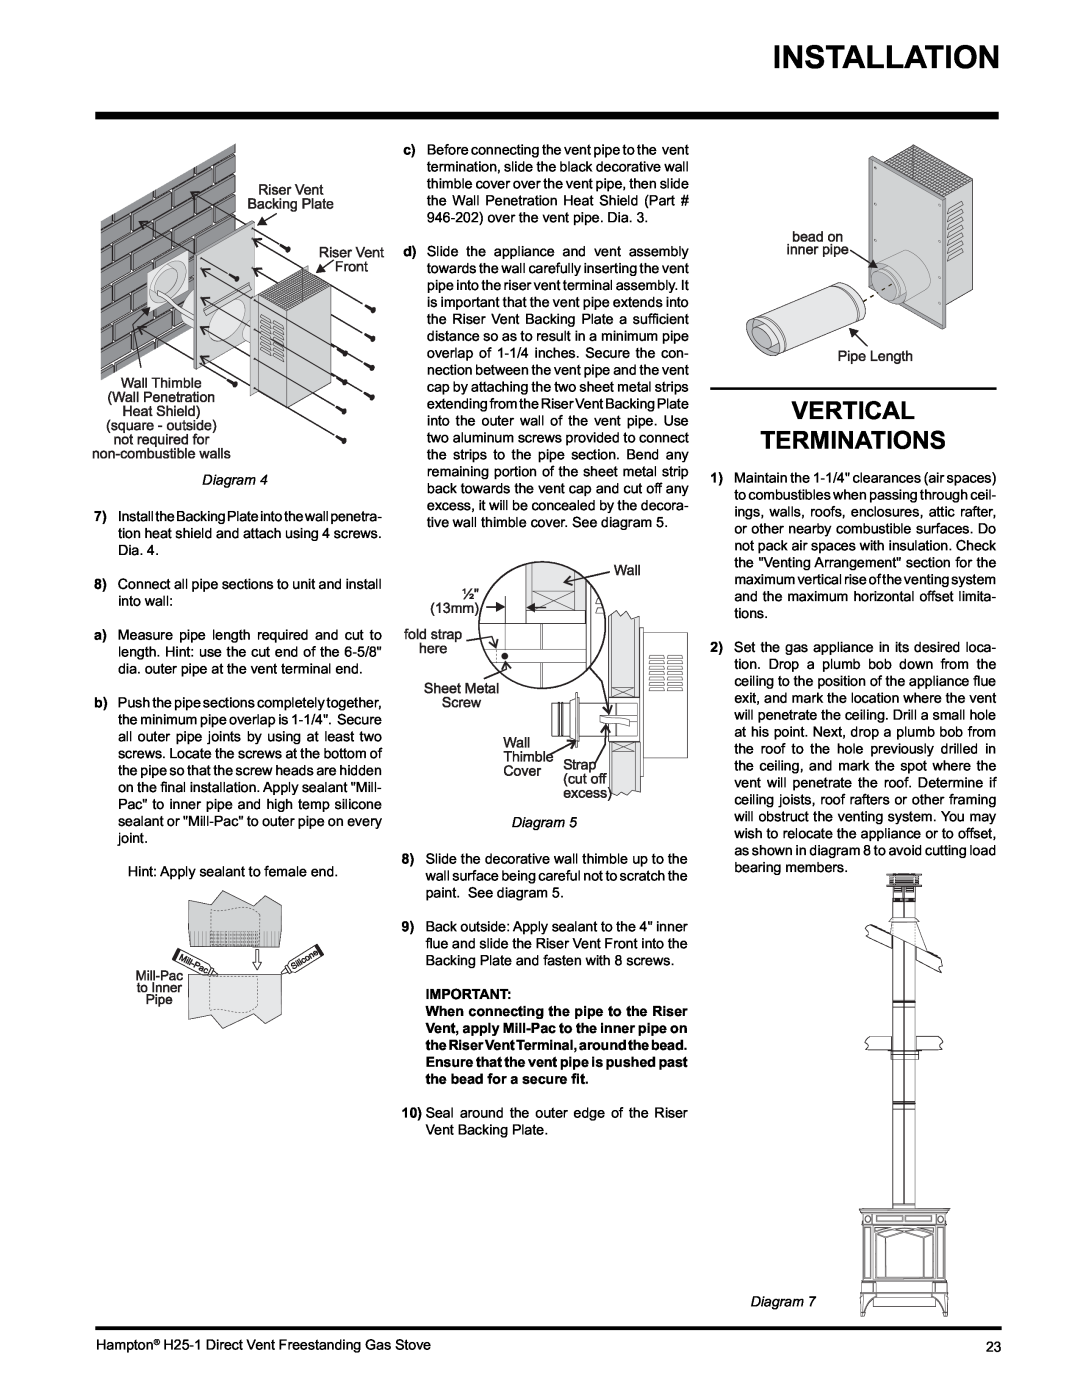 Hampton Direct H25-LP1, H25-NG1 installation manual Vertical Terminations, Installation, Diagram 